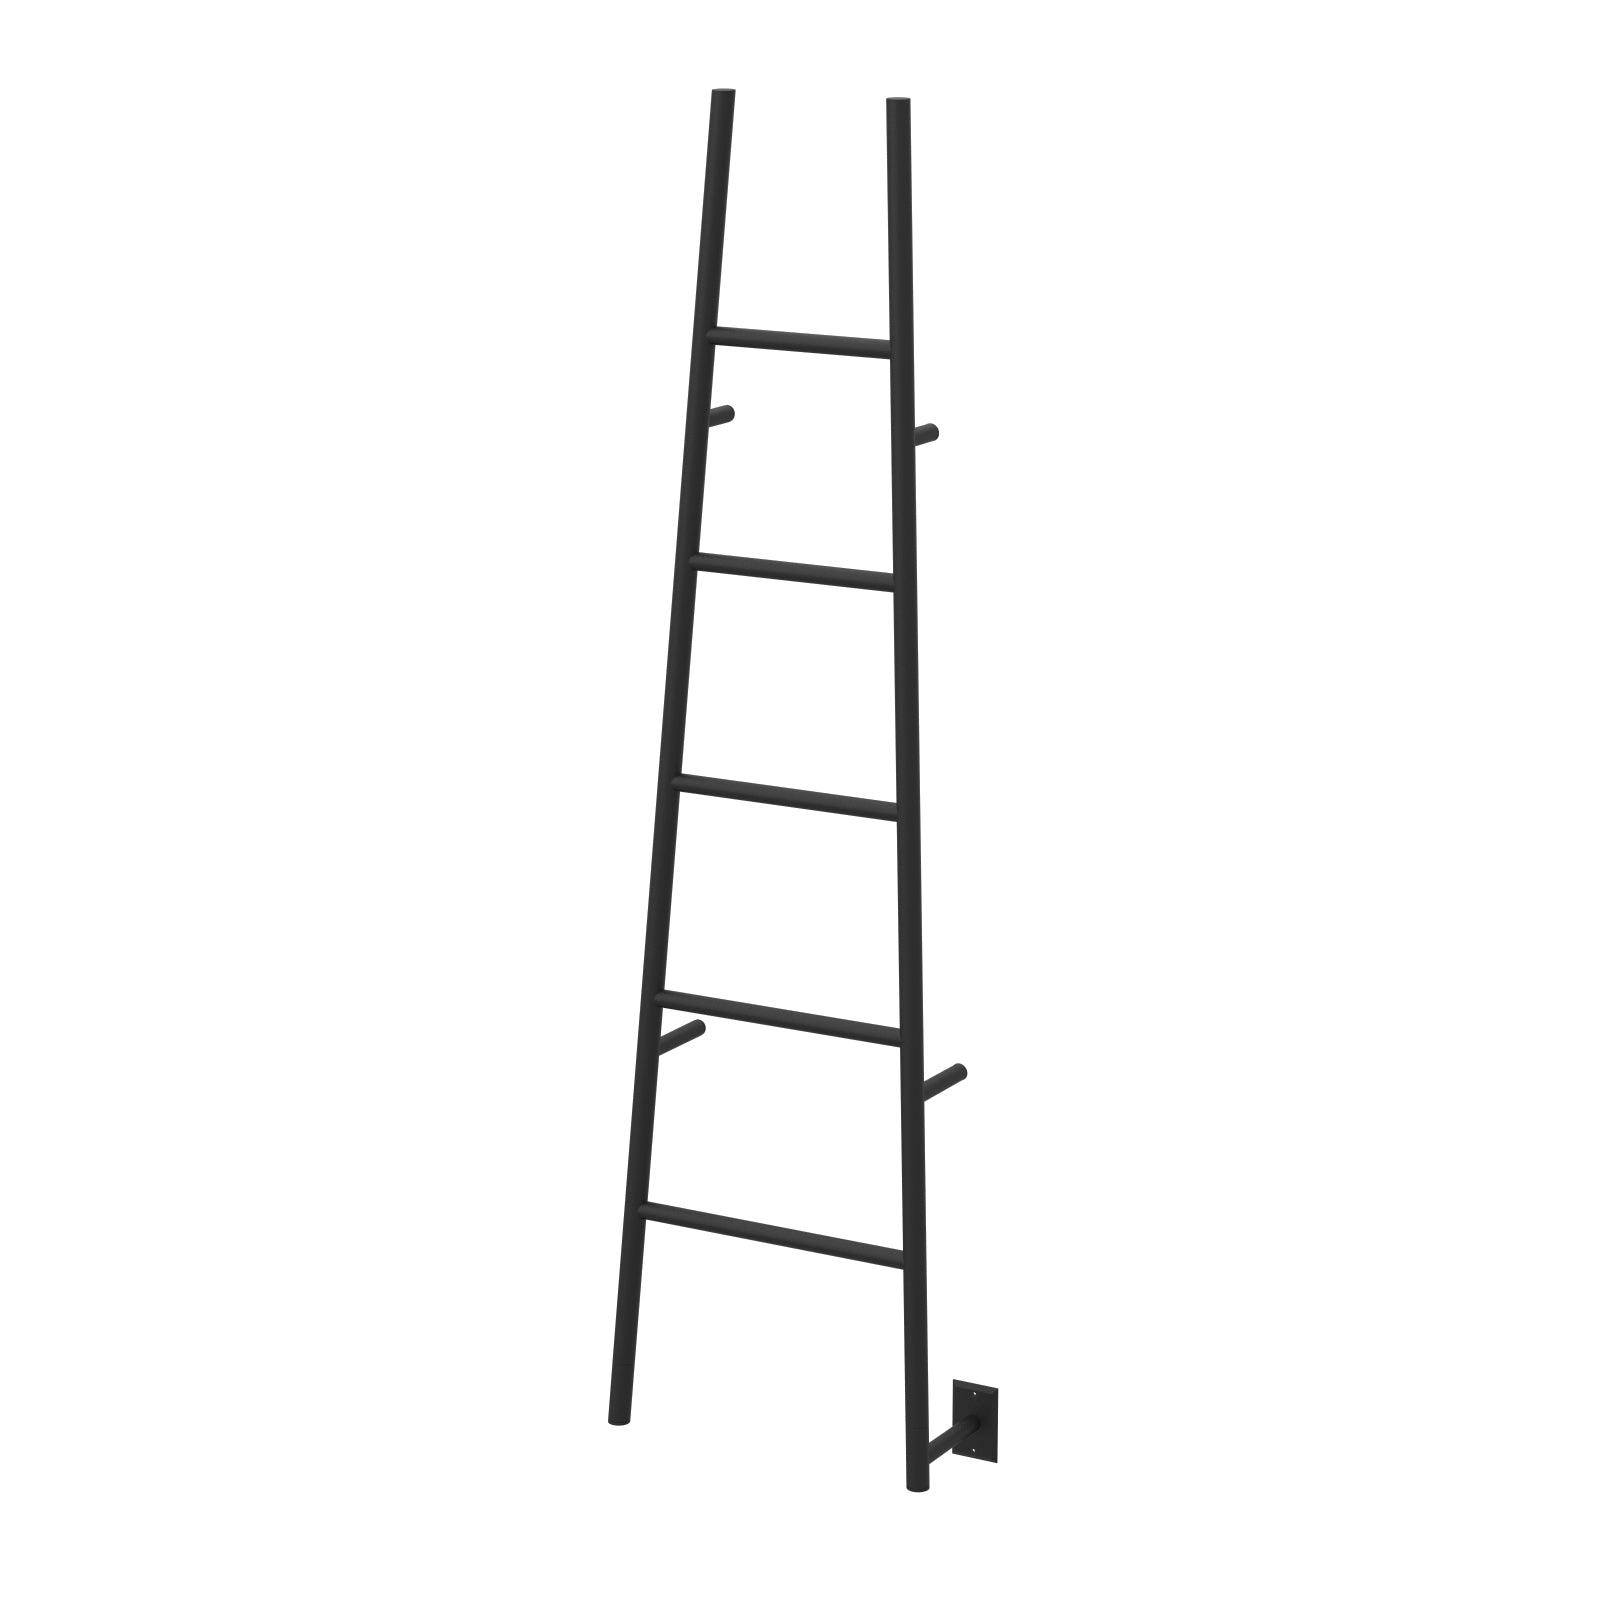 Amba Jeeves Model A Ladder Heated Towel Rack